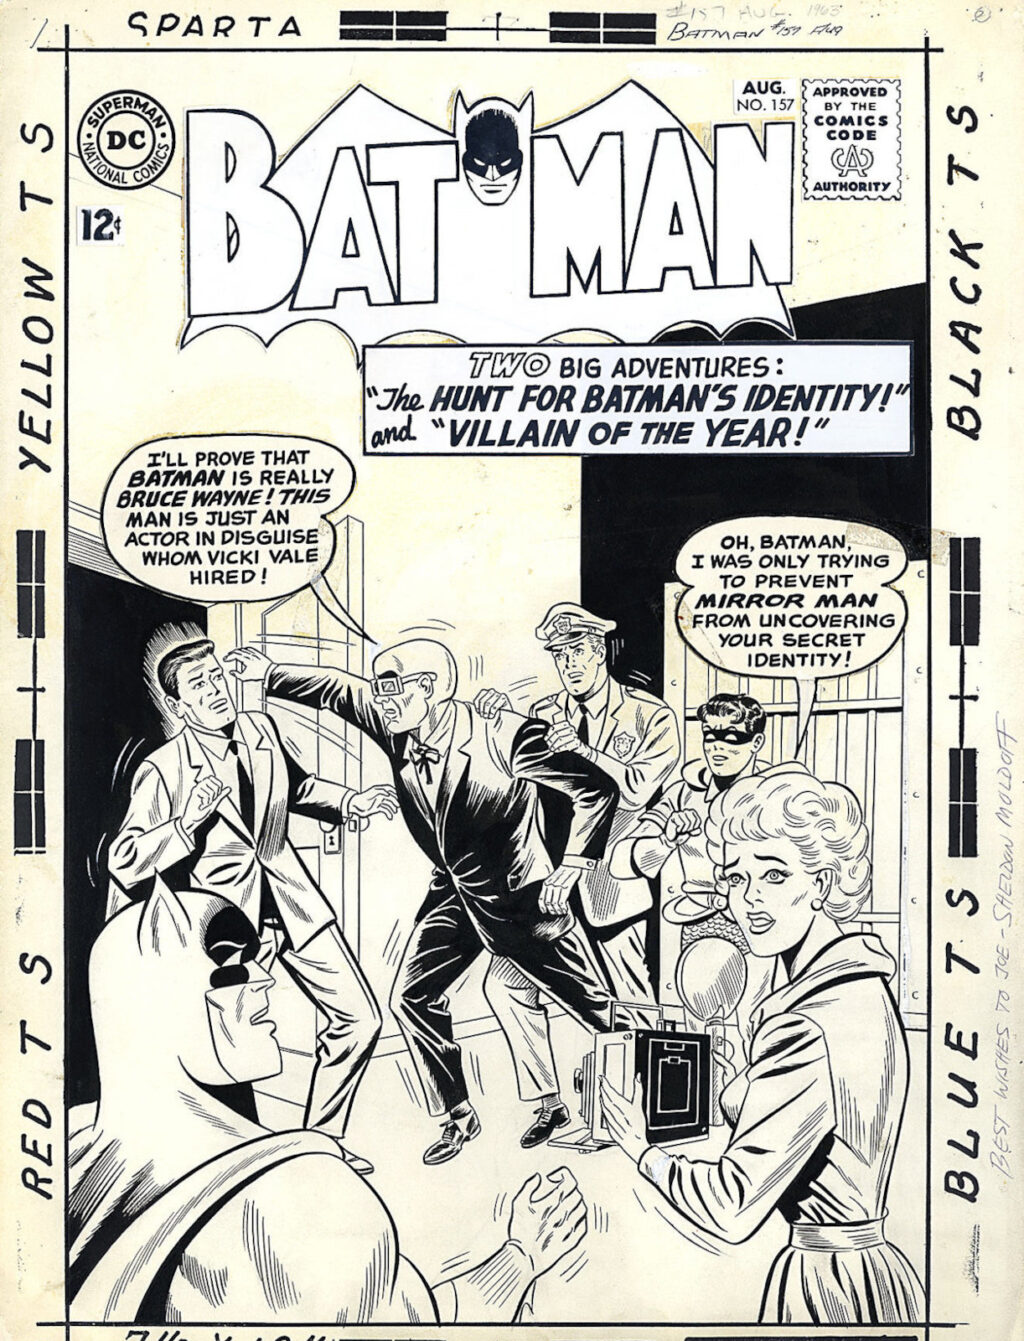 Batman issue 157 by Sheldon Moldoff